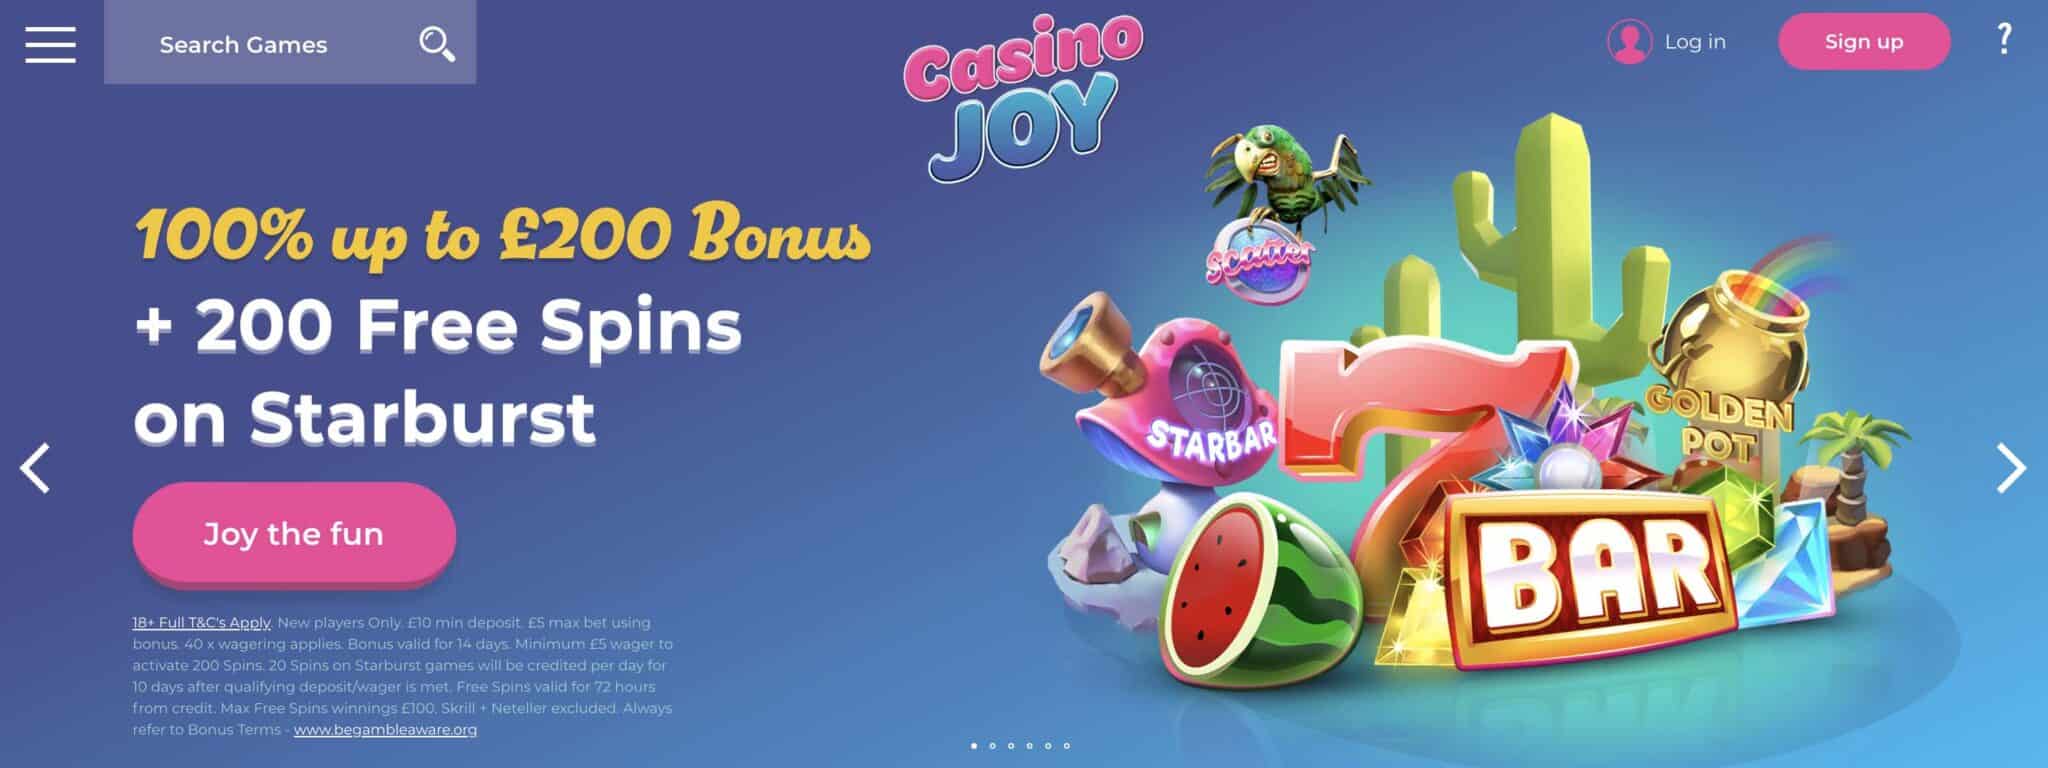 casino joy no deposit bonus codes 2018